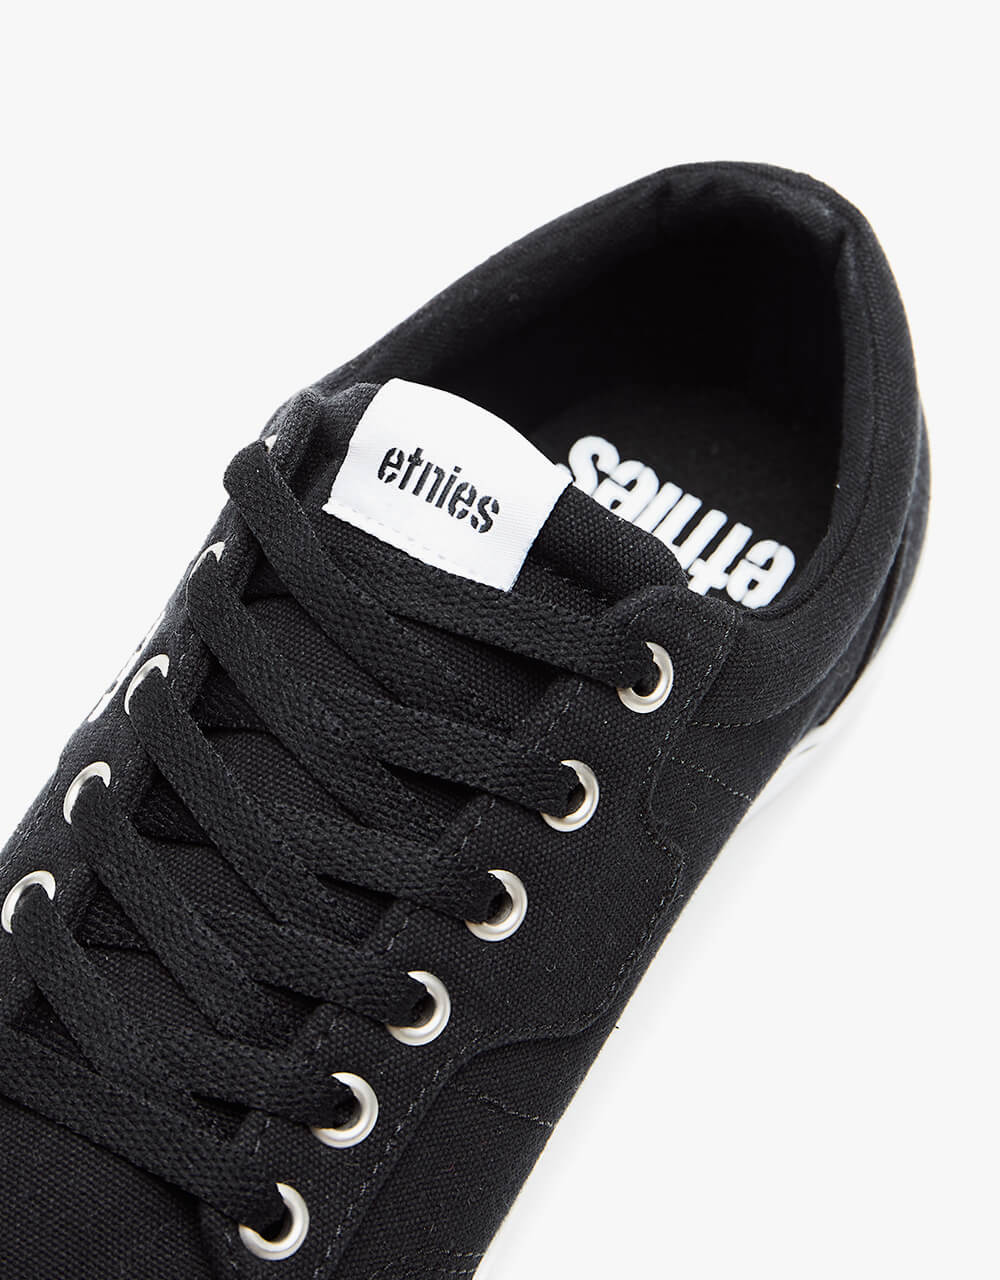 Etnies Kayson Skate Shoes - Black/White